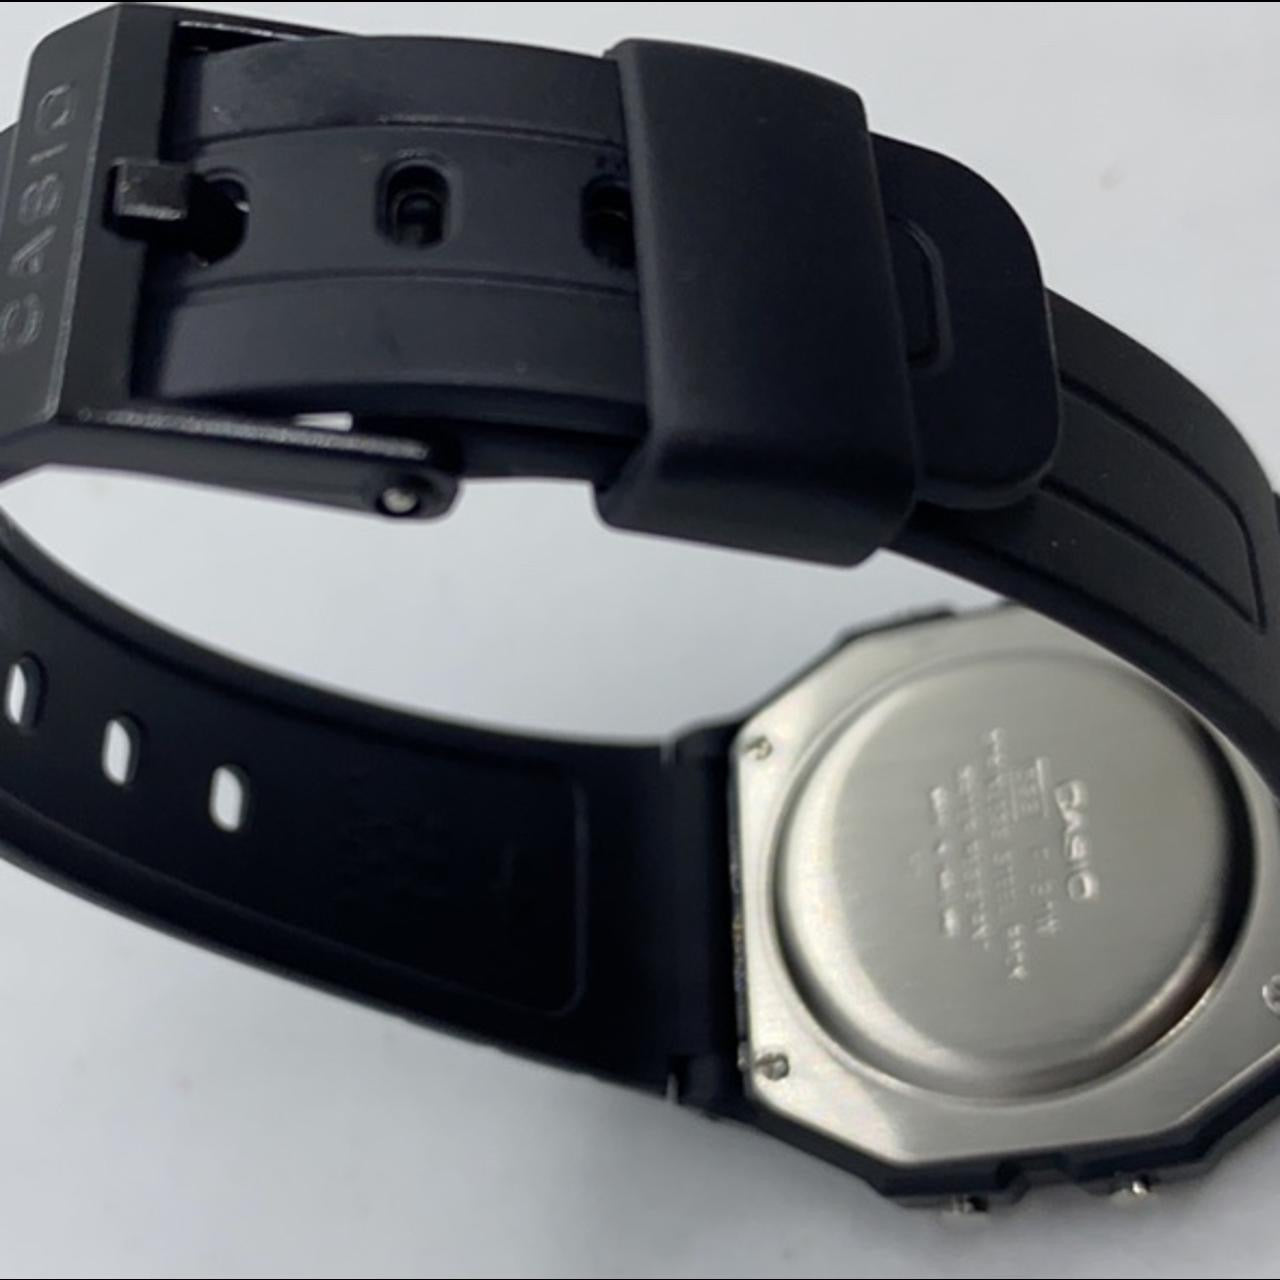 Casio Unisex Sports Watch , 34mm Diameter, 8 inches Wrist Round Long Adjustable Band